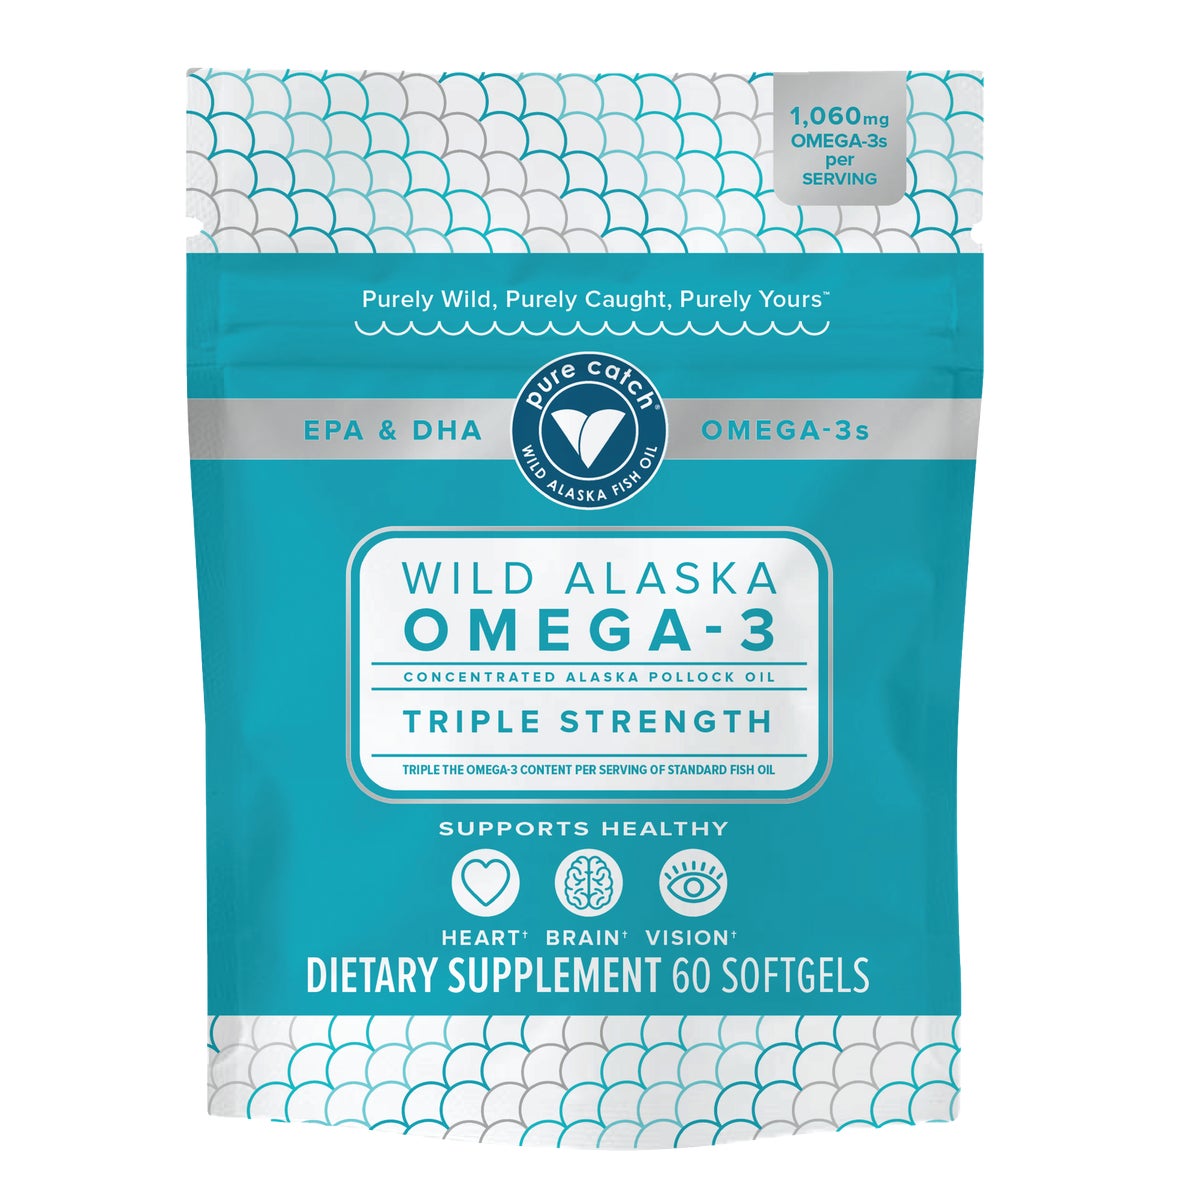 Wild Alaska Omega-3 Fish Oil Supplement